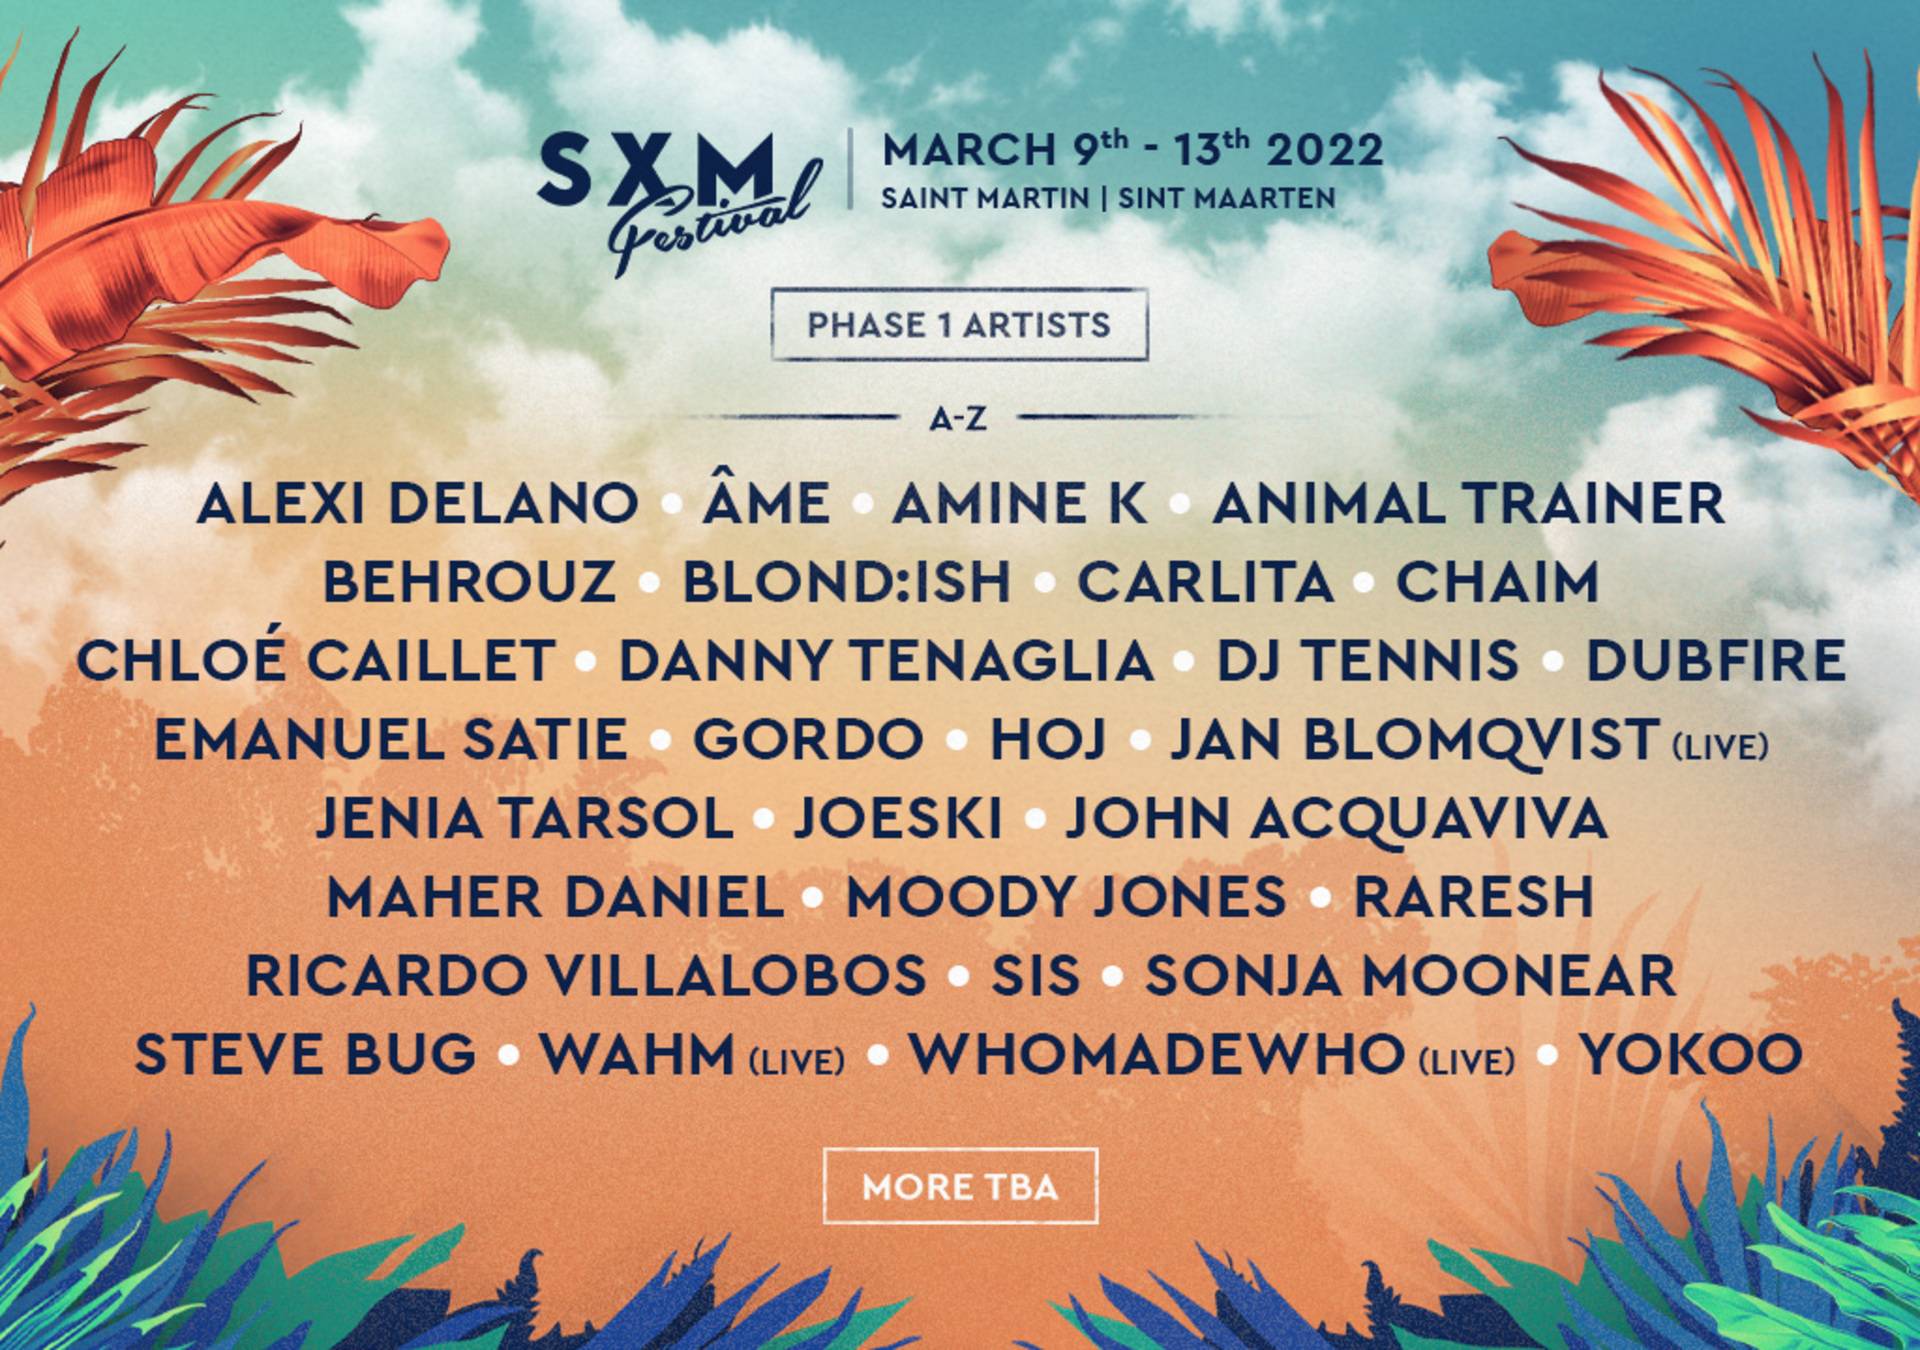 SXM Festival returns to the Caribbean island of Saint Martin this year